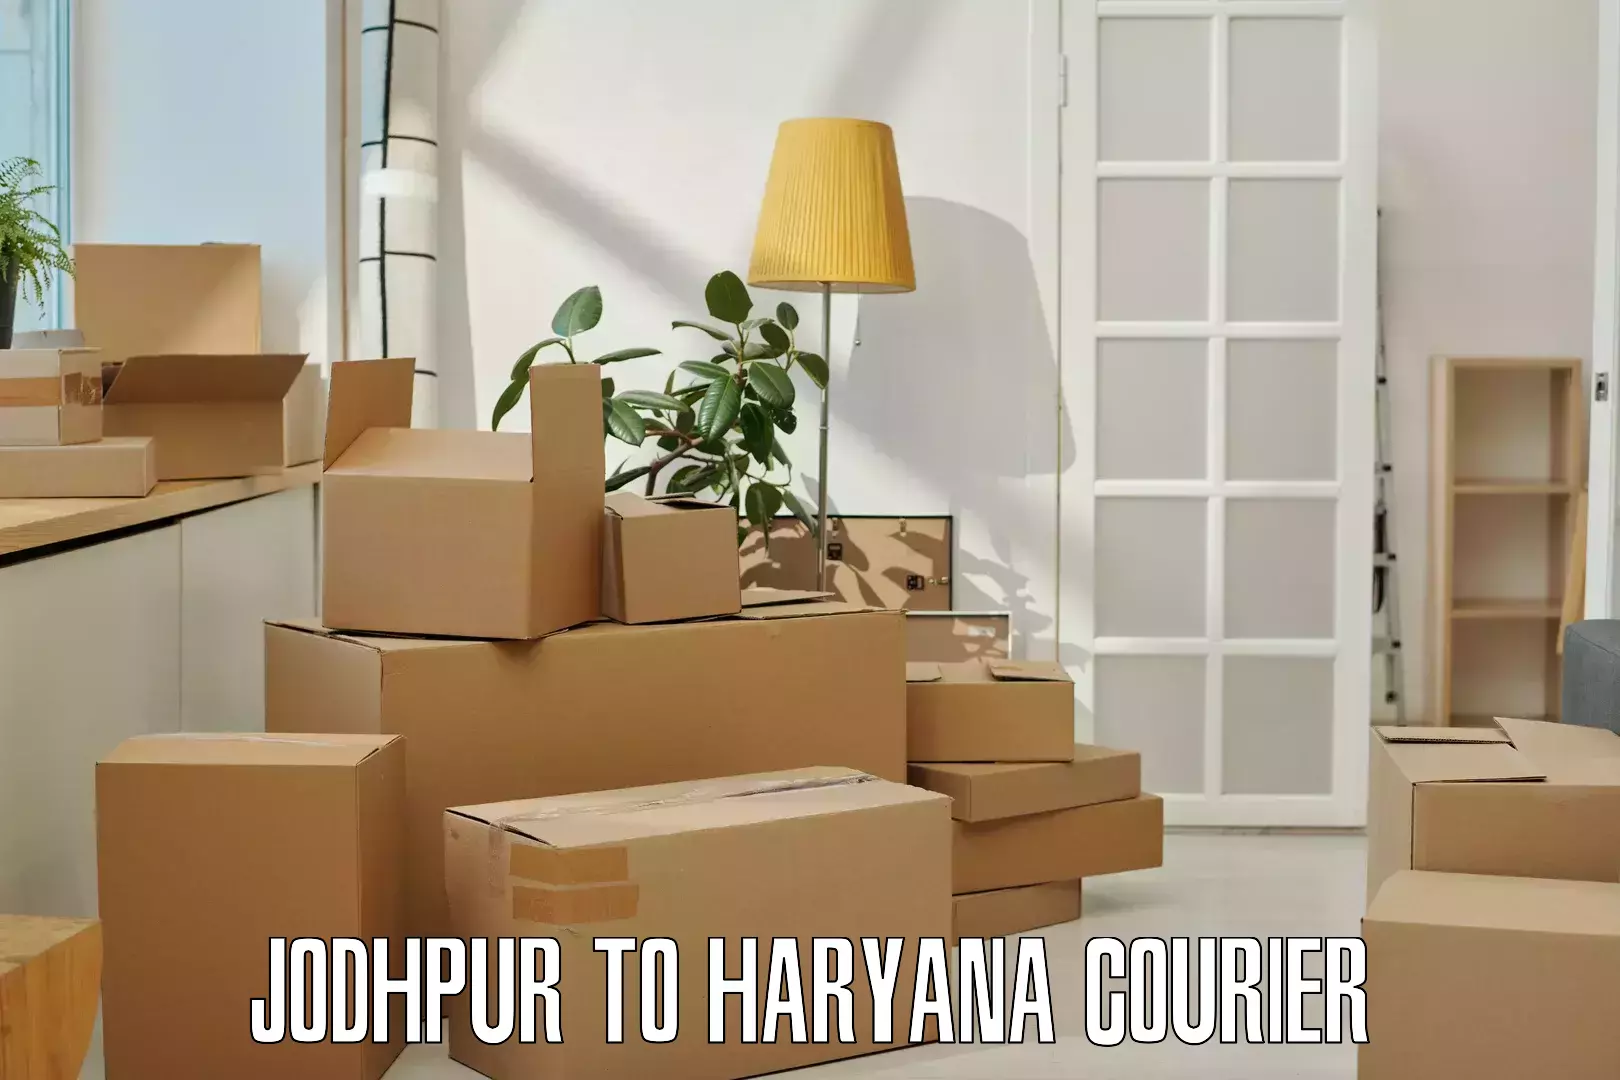 24-hour courier service Jodhpur to Ambala